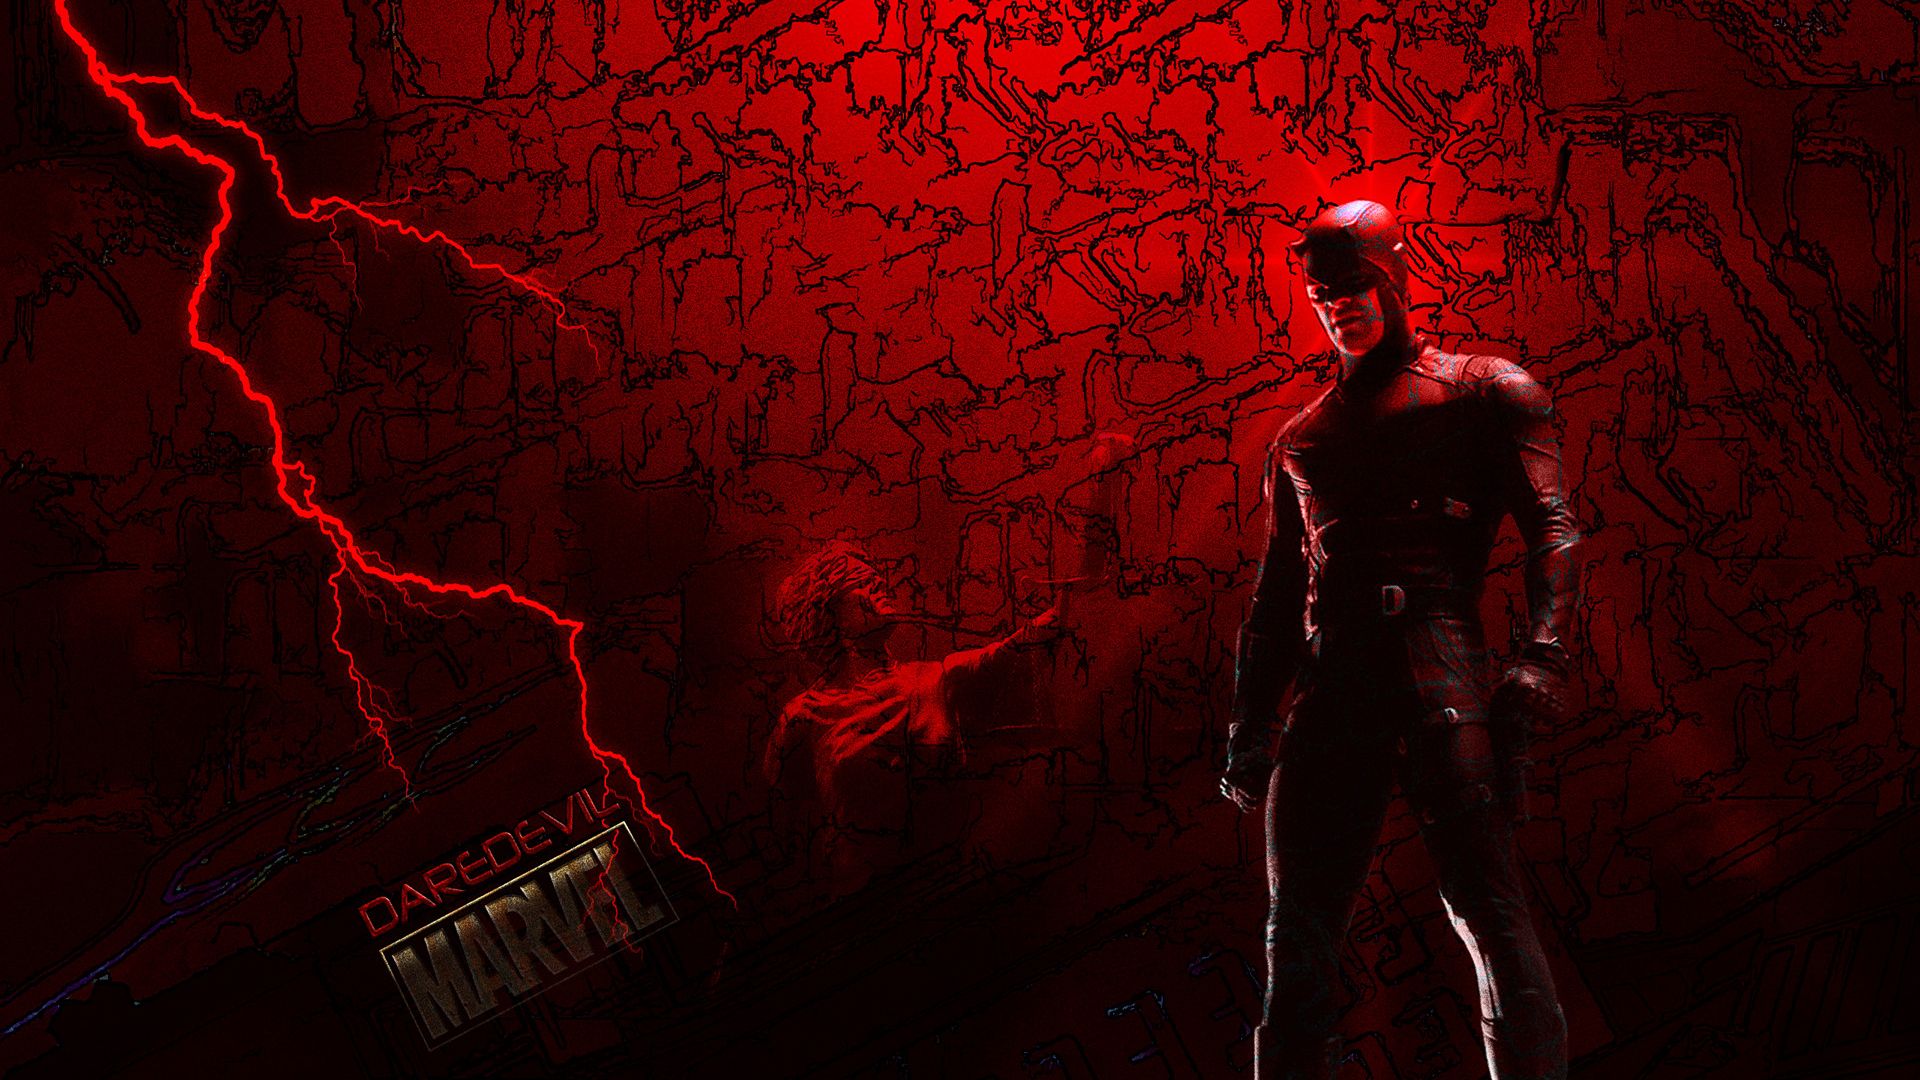 Netflix Daredevil HD Wallpaper Free Download Wallpaperxyz.com 57